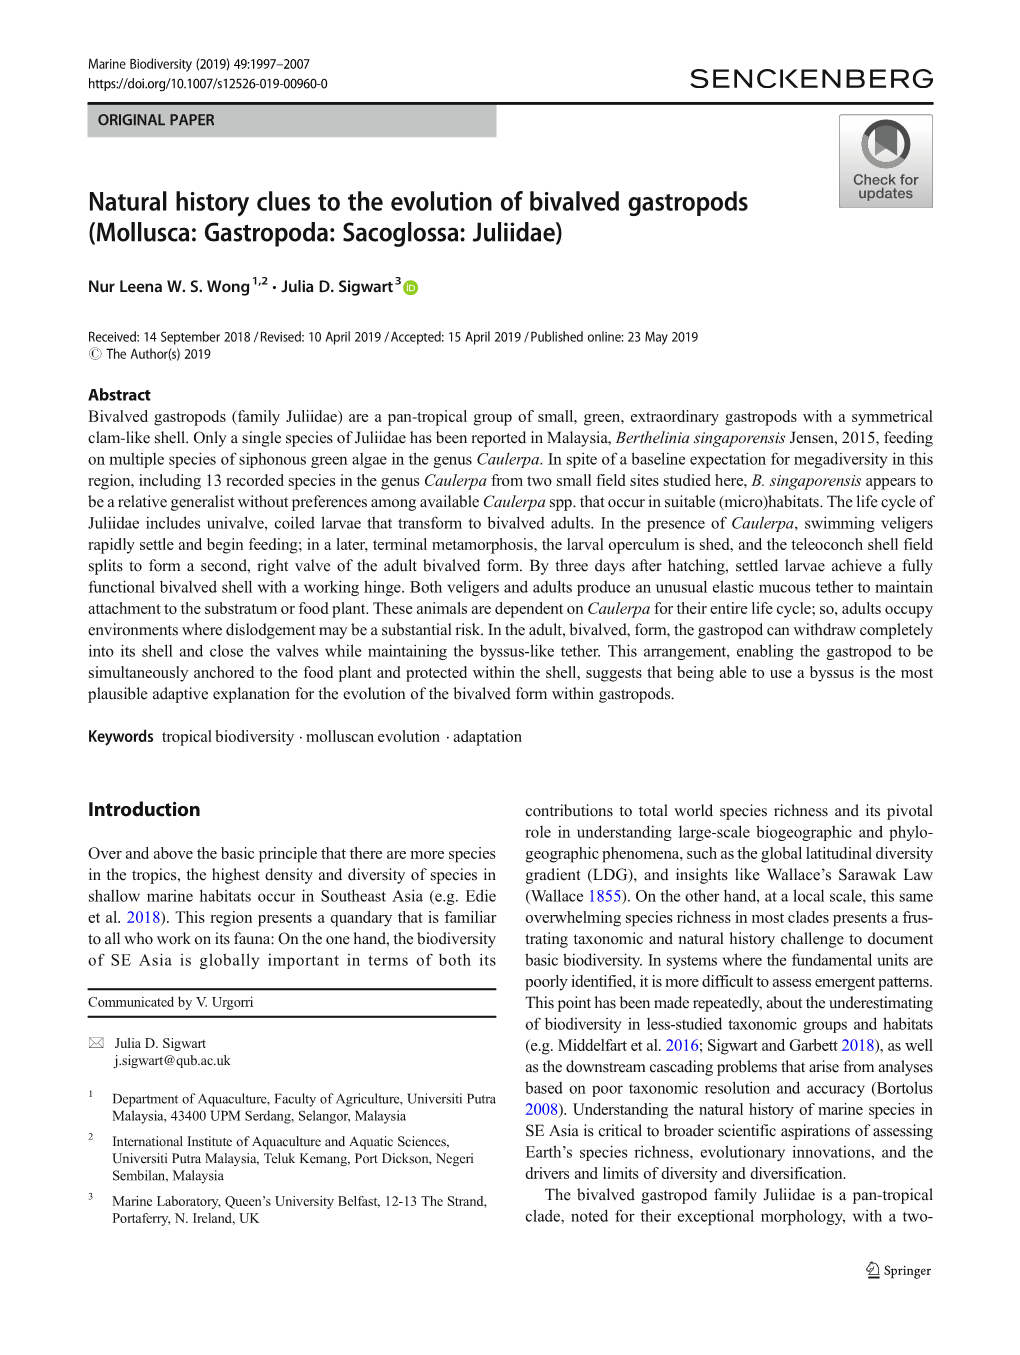 Natural History Clues to the Evolution of Bivalved Gastropods (Mollusca: Gastropoda: Sacoglossa: Juliidae)